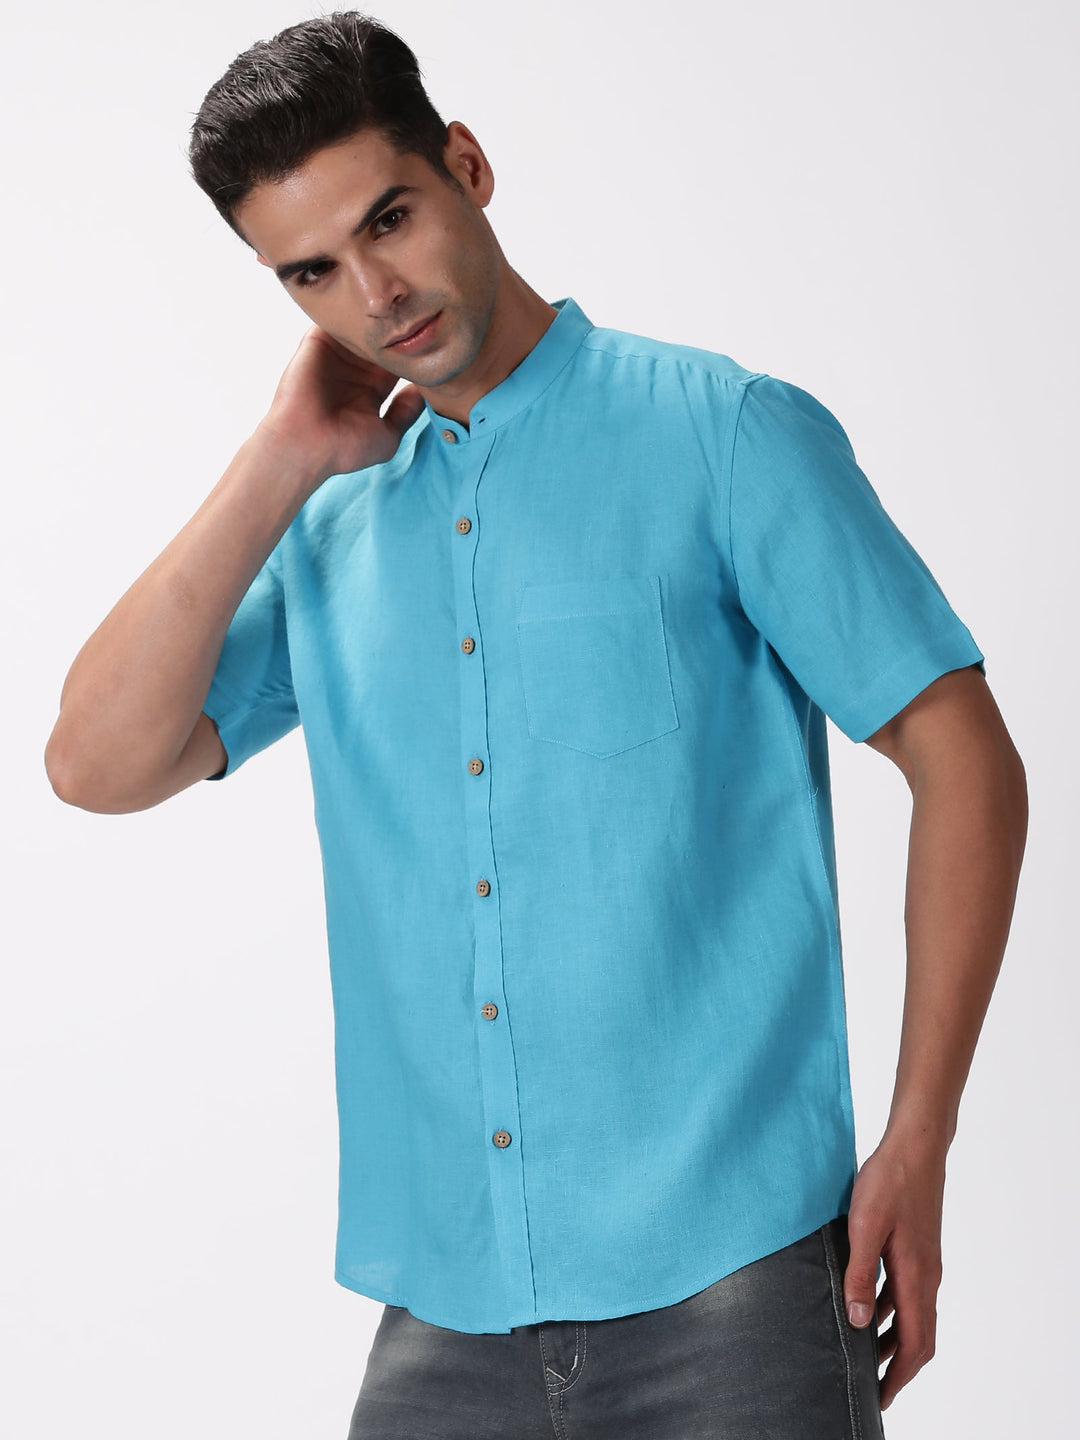 Enzo - Pure Linen Mandarin Collar Half Sleeve Shirt - Aqua Blue | Rescue